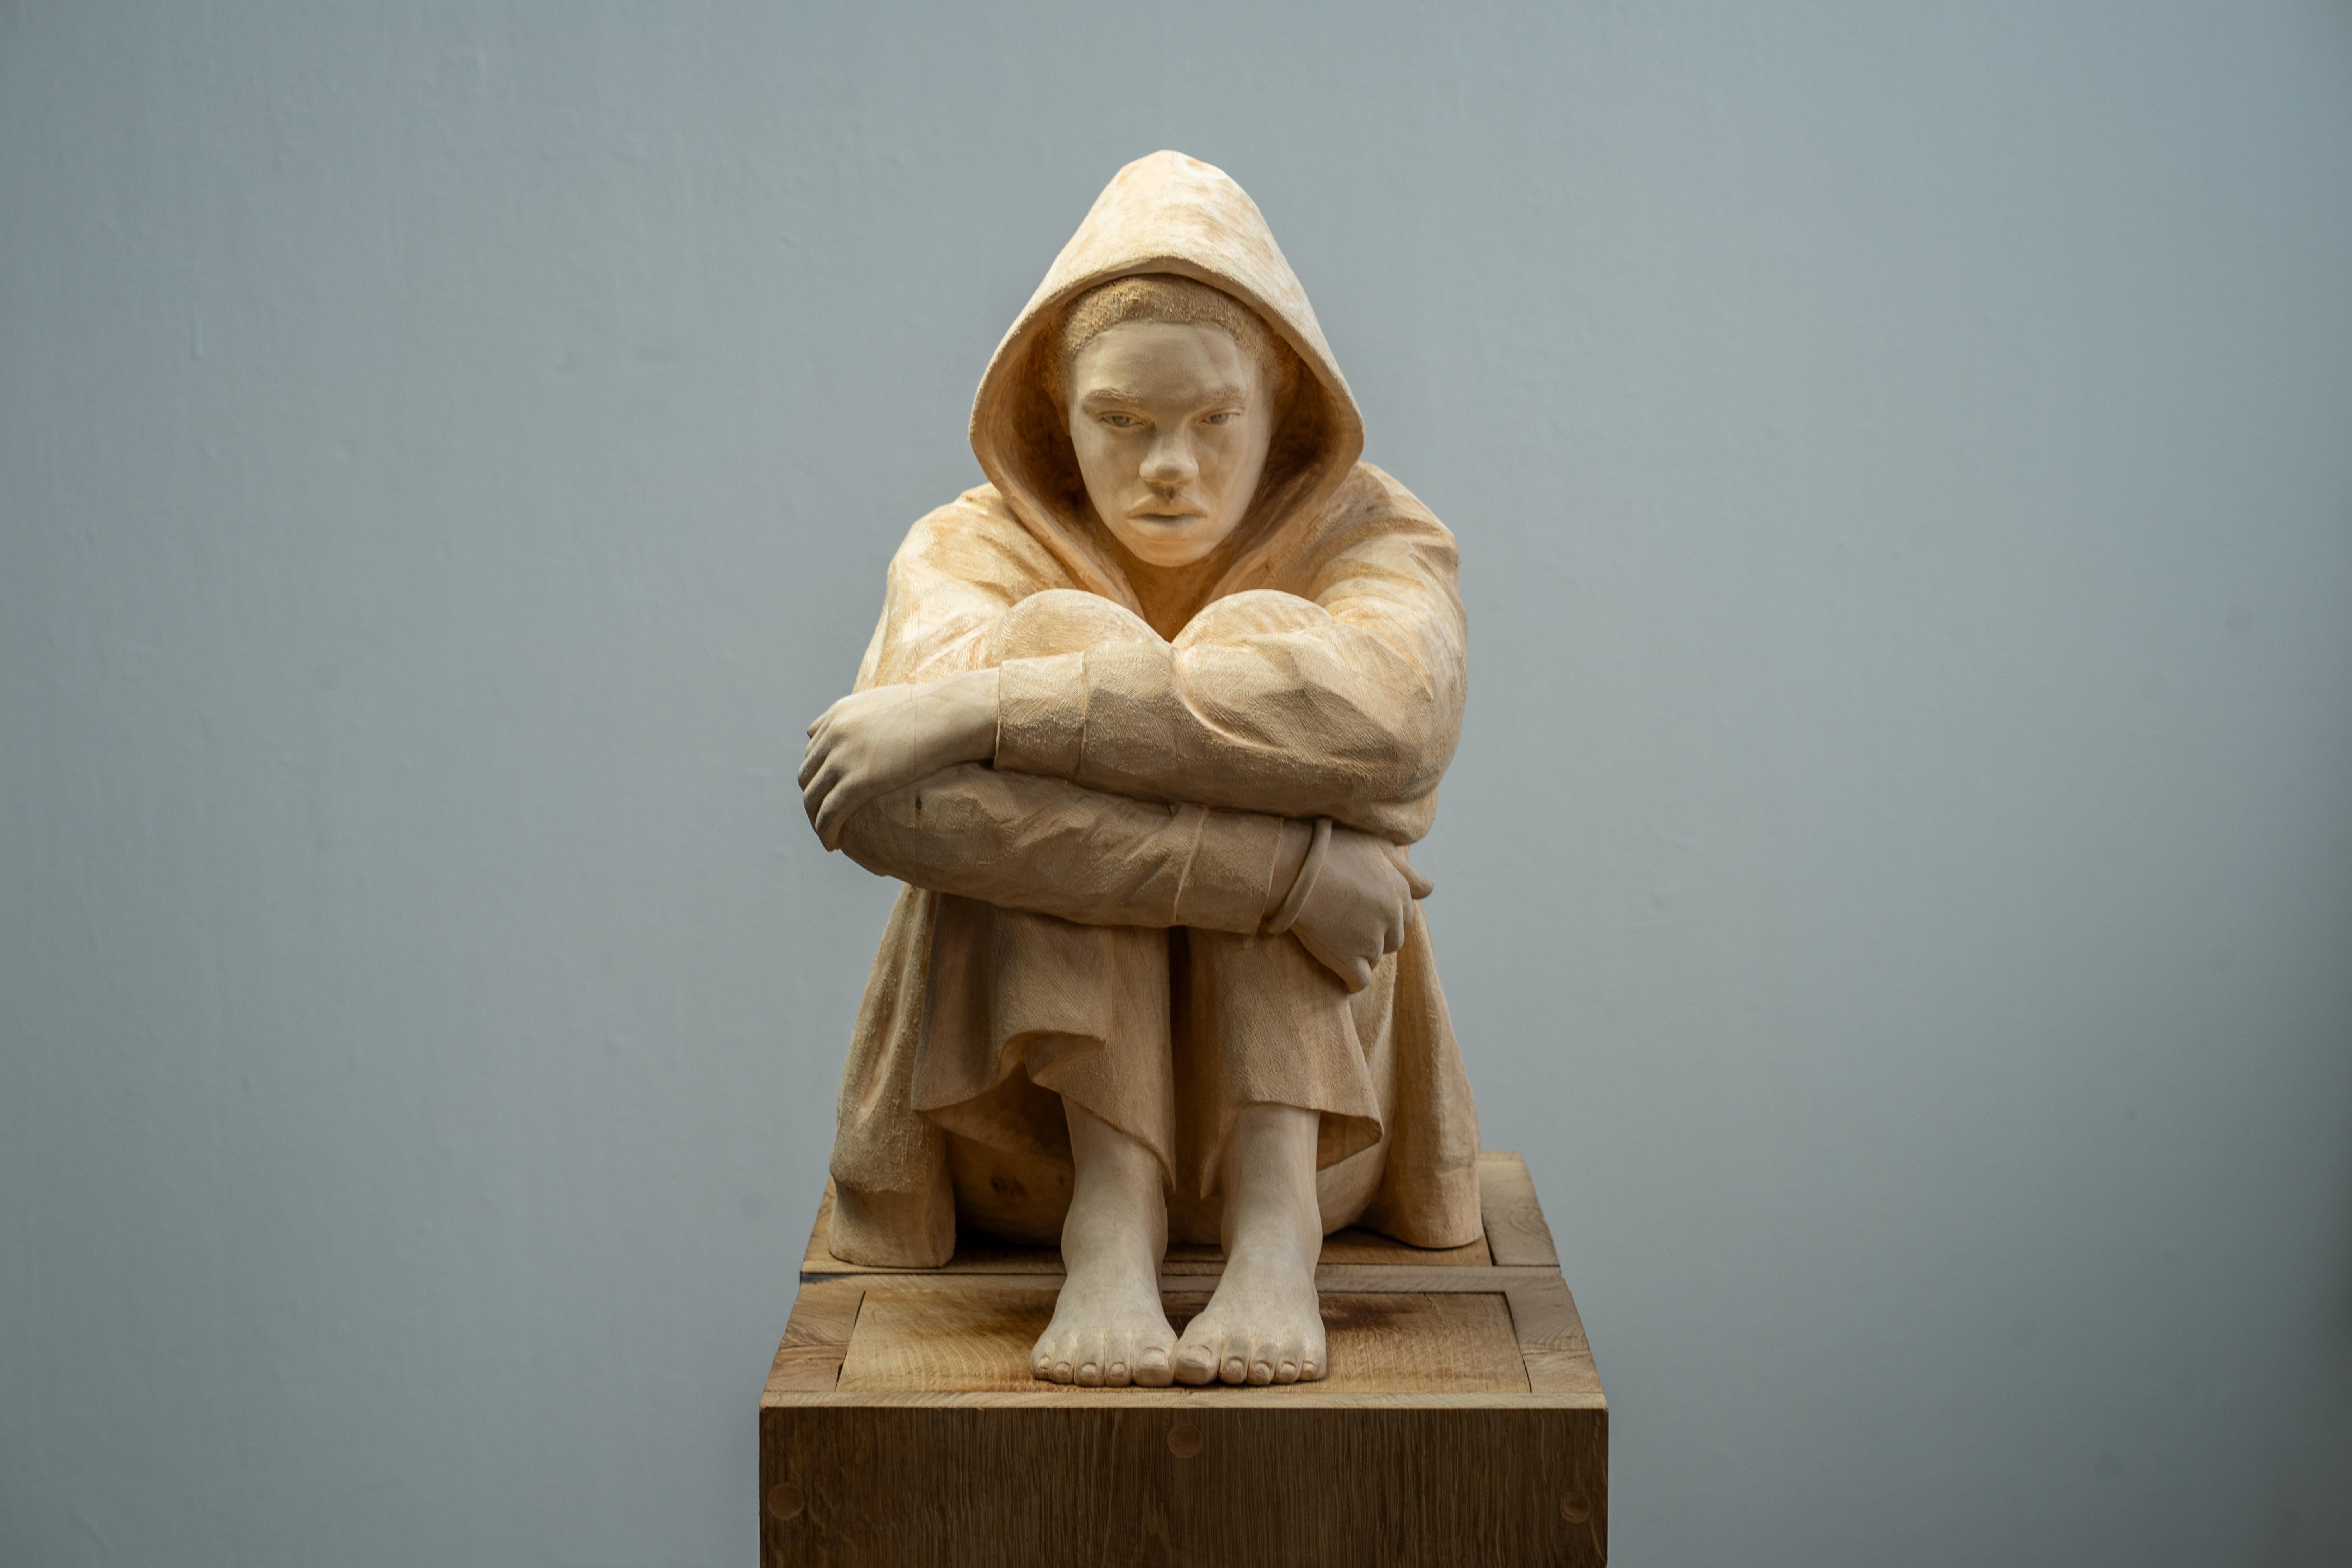 Boris Paval Conen Figurative Sculpture - Senne- 21st Century contemporary figurative wooden sculpture of a girl 